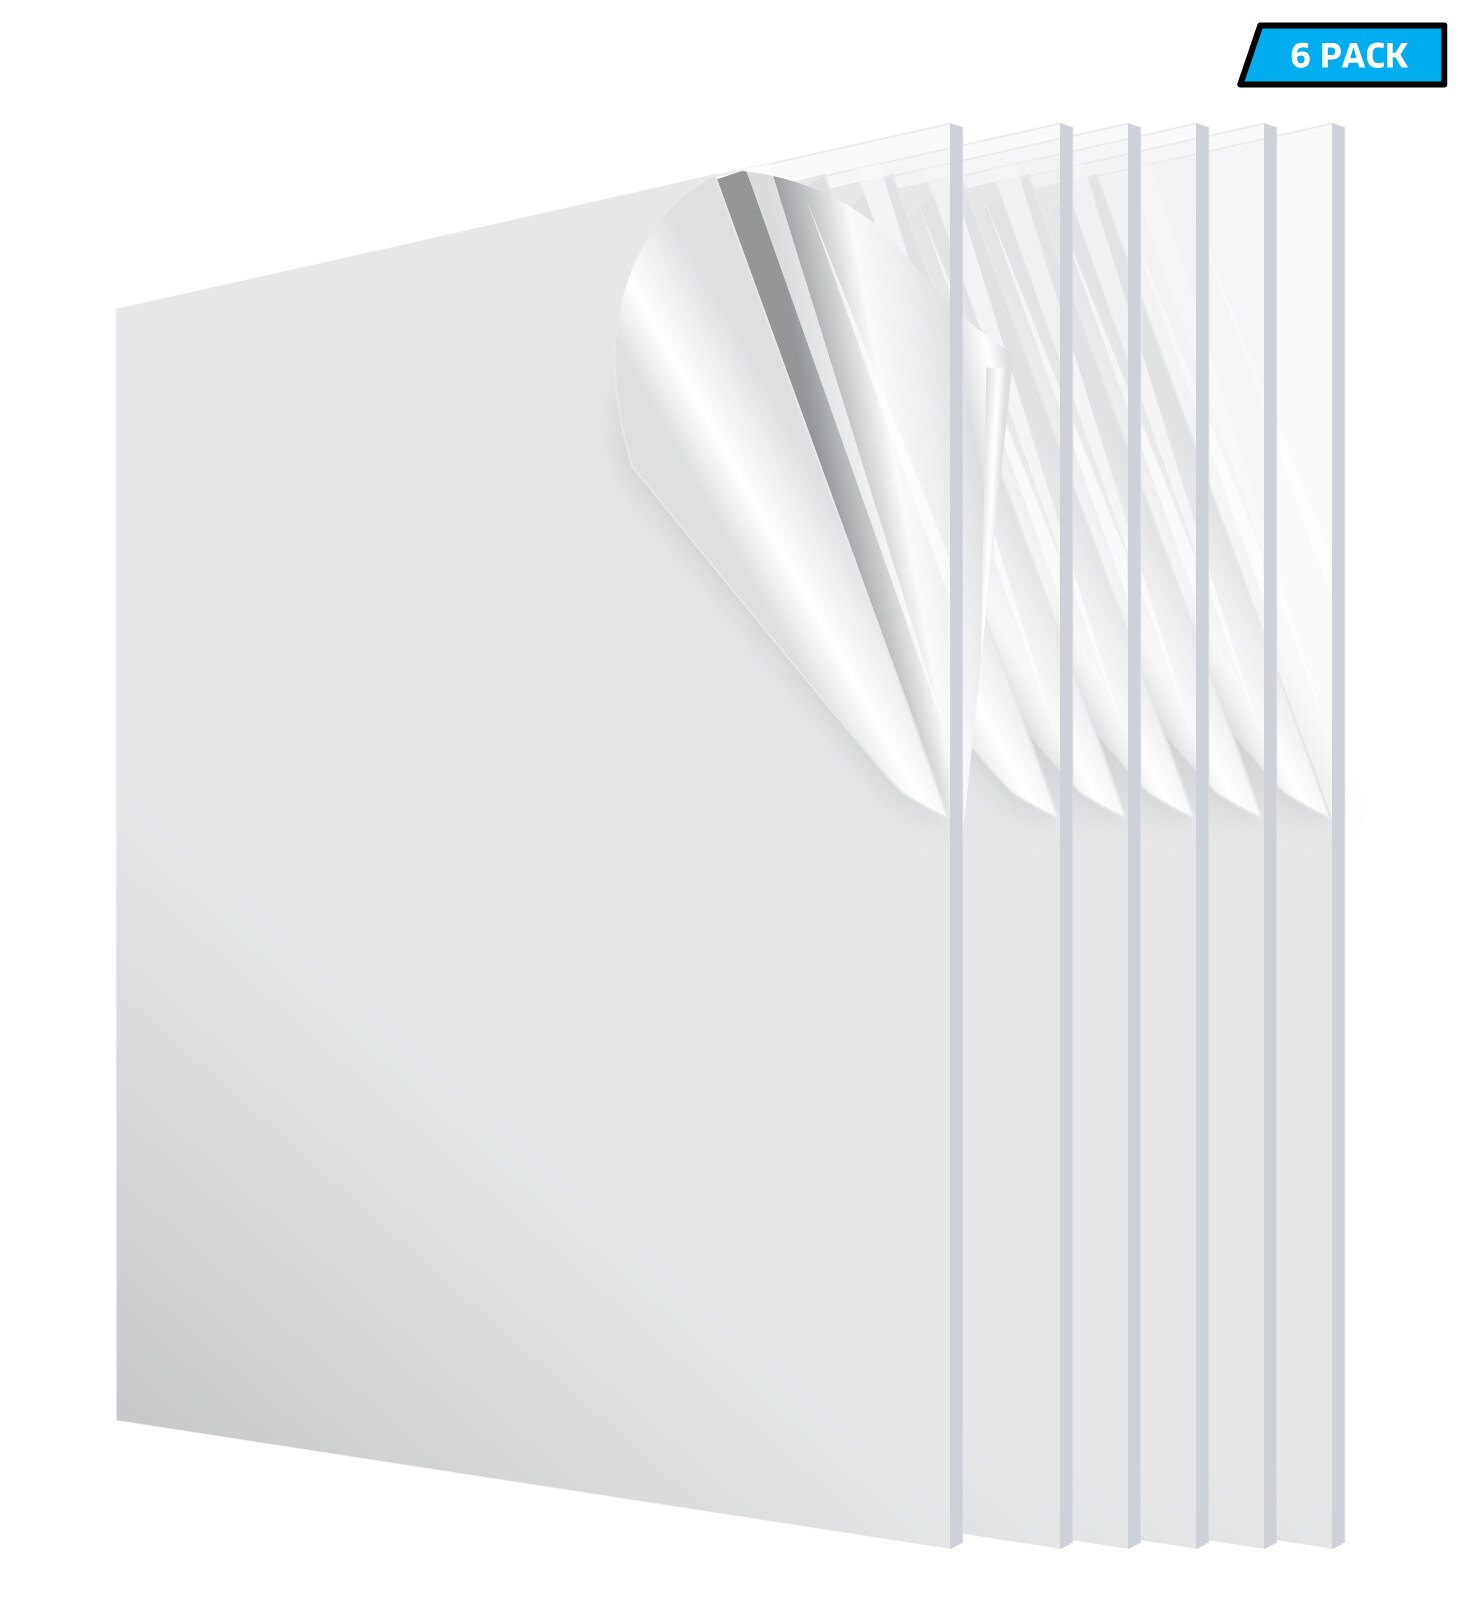 AmeriLux 0.118 x 24 x 36 Gloss White Acrylic Sheet at Menards®